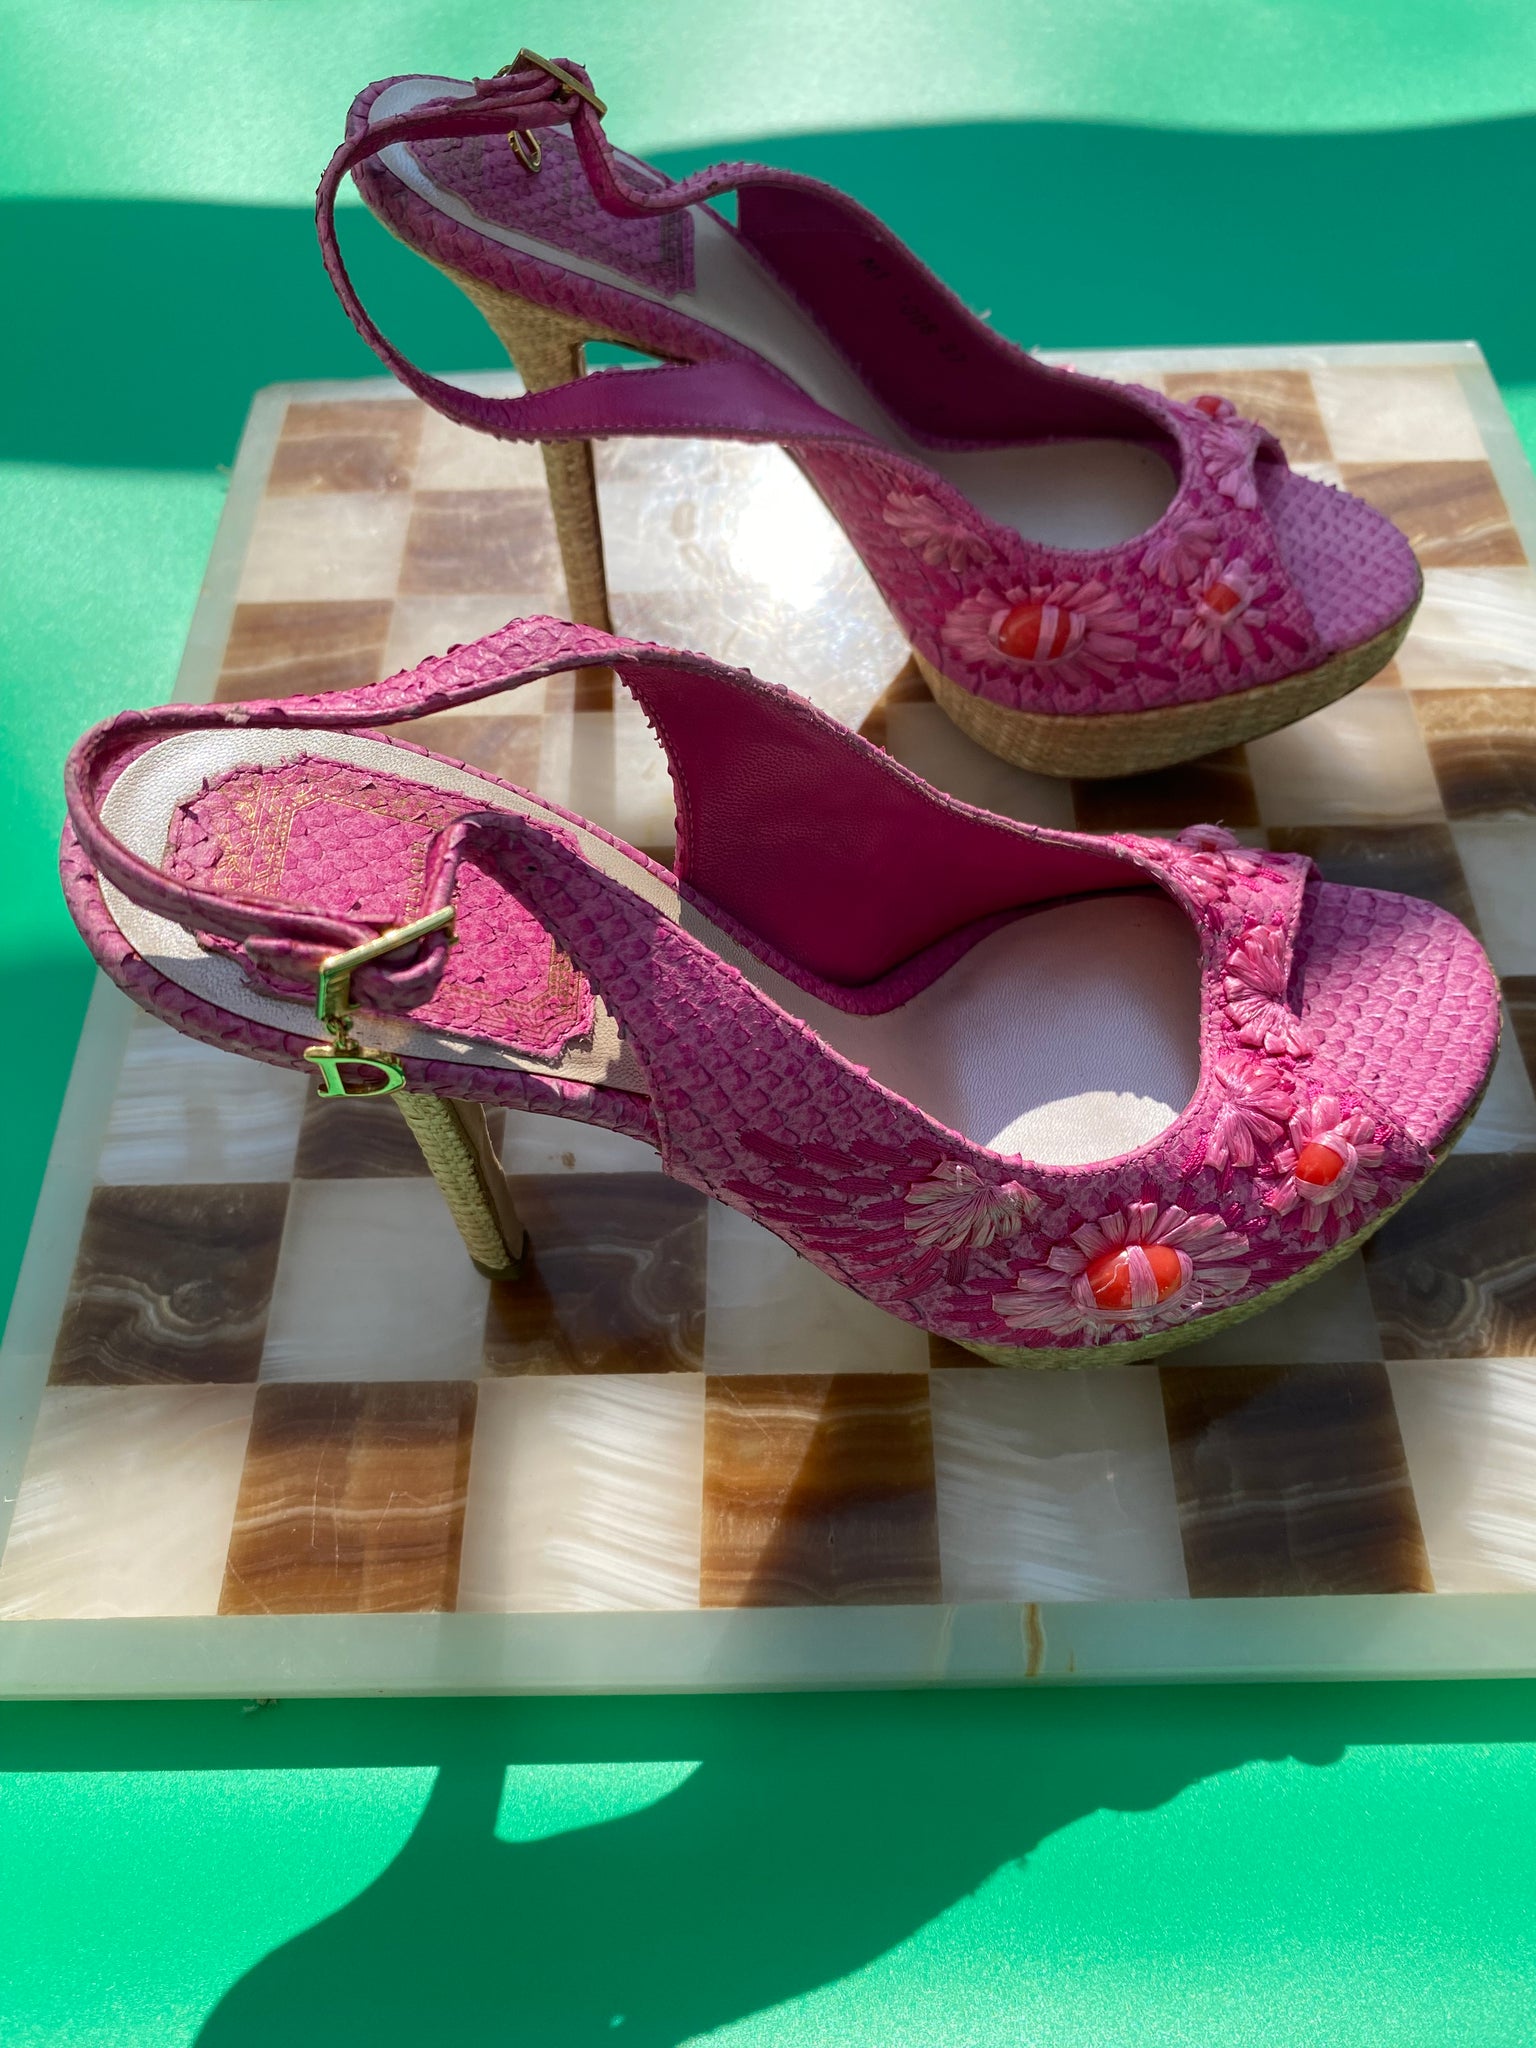 Dior Vintage Python Platform Sandals